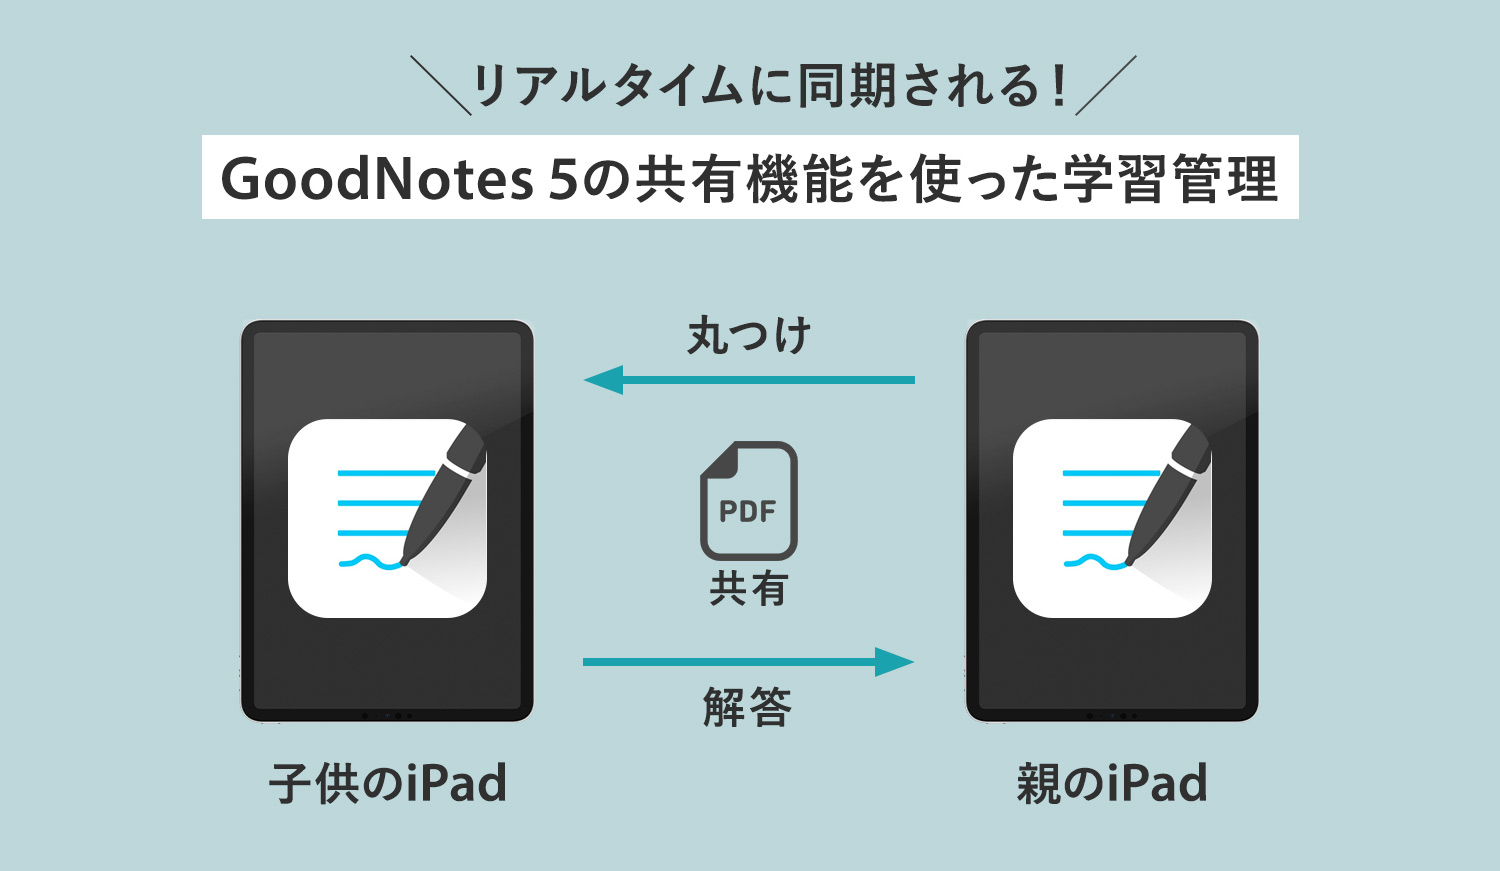 GoodNotes 5の共有機能を使った学習管理方法